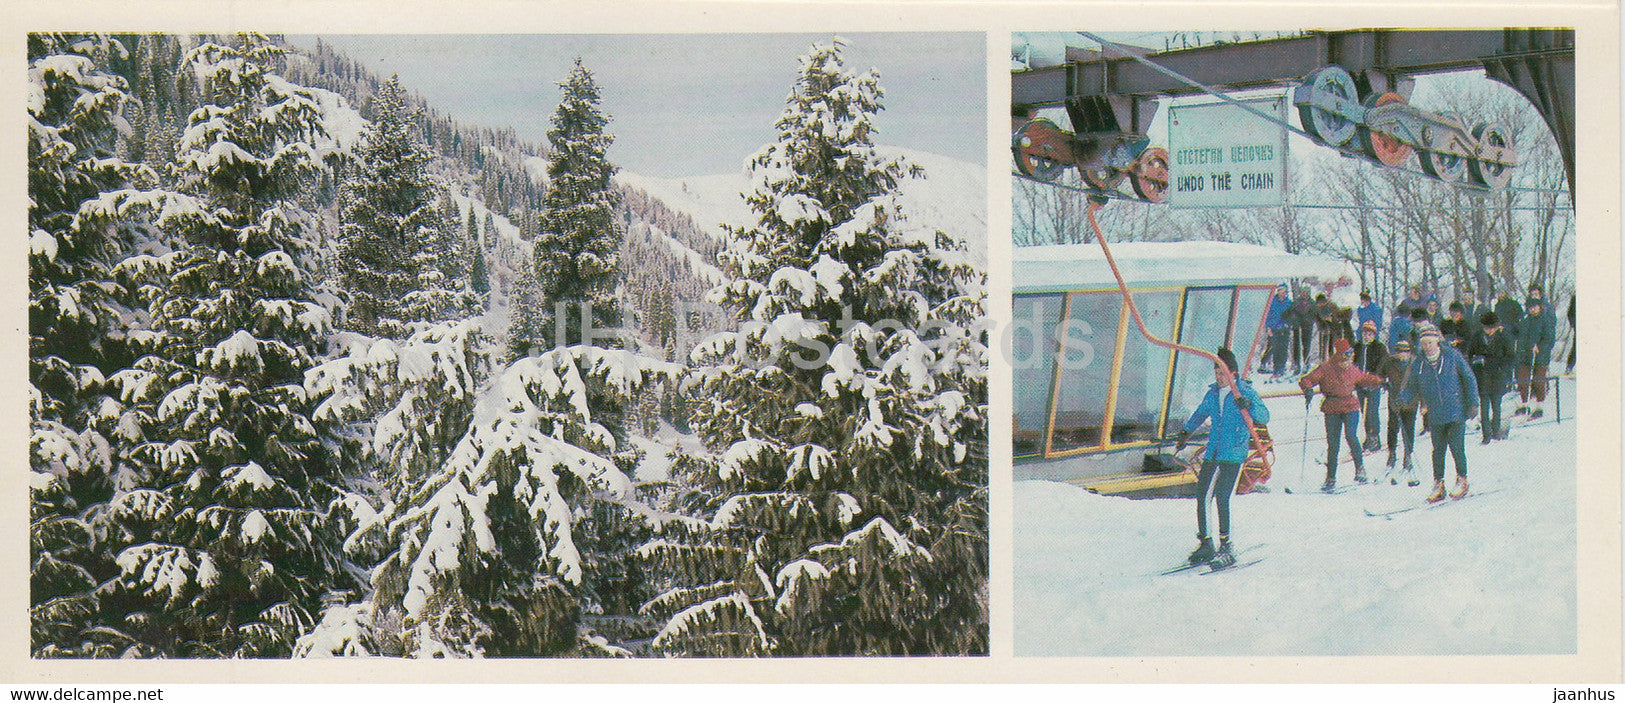 Tsaghkadzor - winter resort - cable car - 1981 - Armenia USSR - unused - JH Postcards